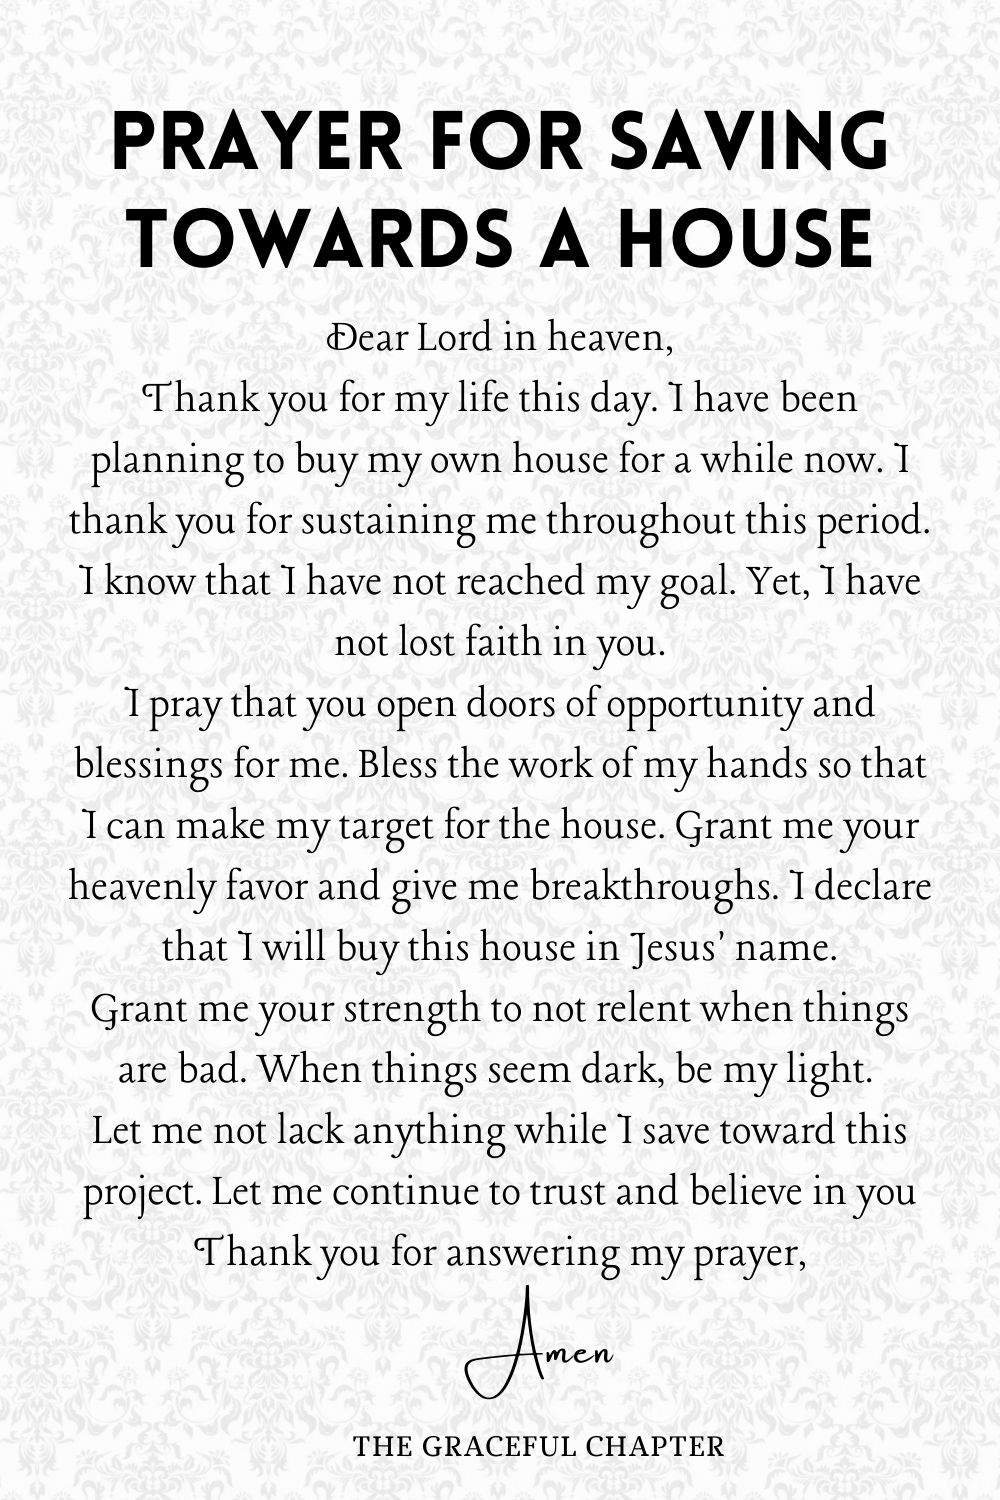 Prayer for saving towards a house